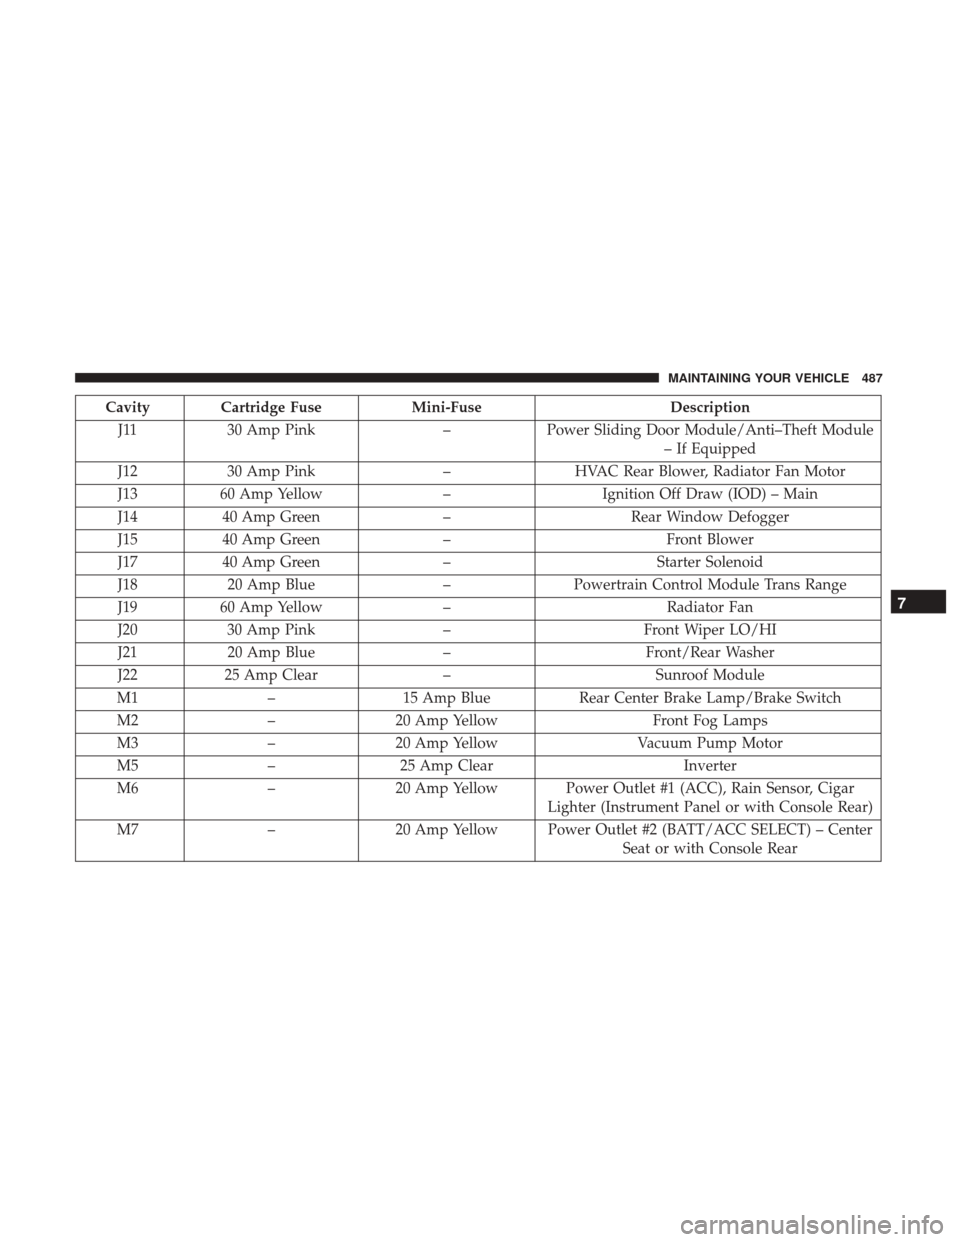 DODGE GRAND CARAVAN 2017 5.G Owners Manual Cavity Cartridge FuseMini-FuseDescription
J11 30 Amp Pink –Power Sliding Door Module/Anti–Theft Module
– If Equipped
J12 30 Amp Pink –HVAC Rear Blower, Radiator Fan Motor
J13 60 Amp Yellow –